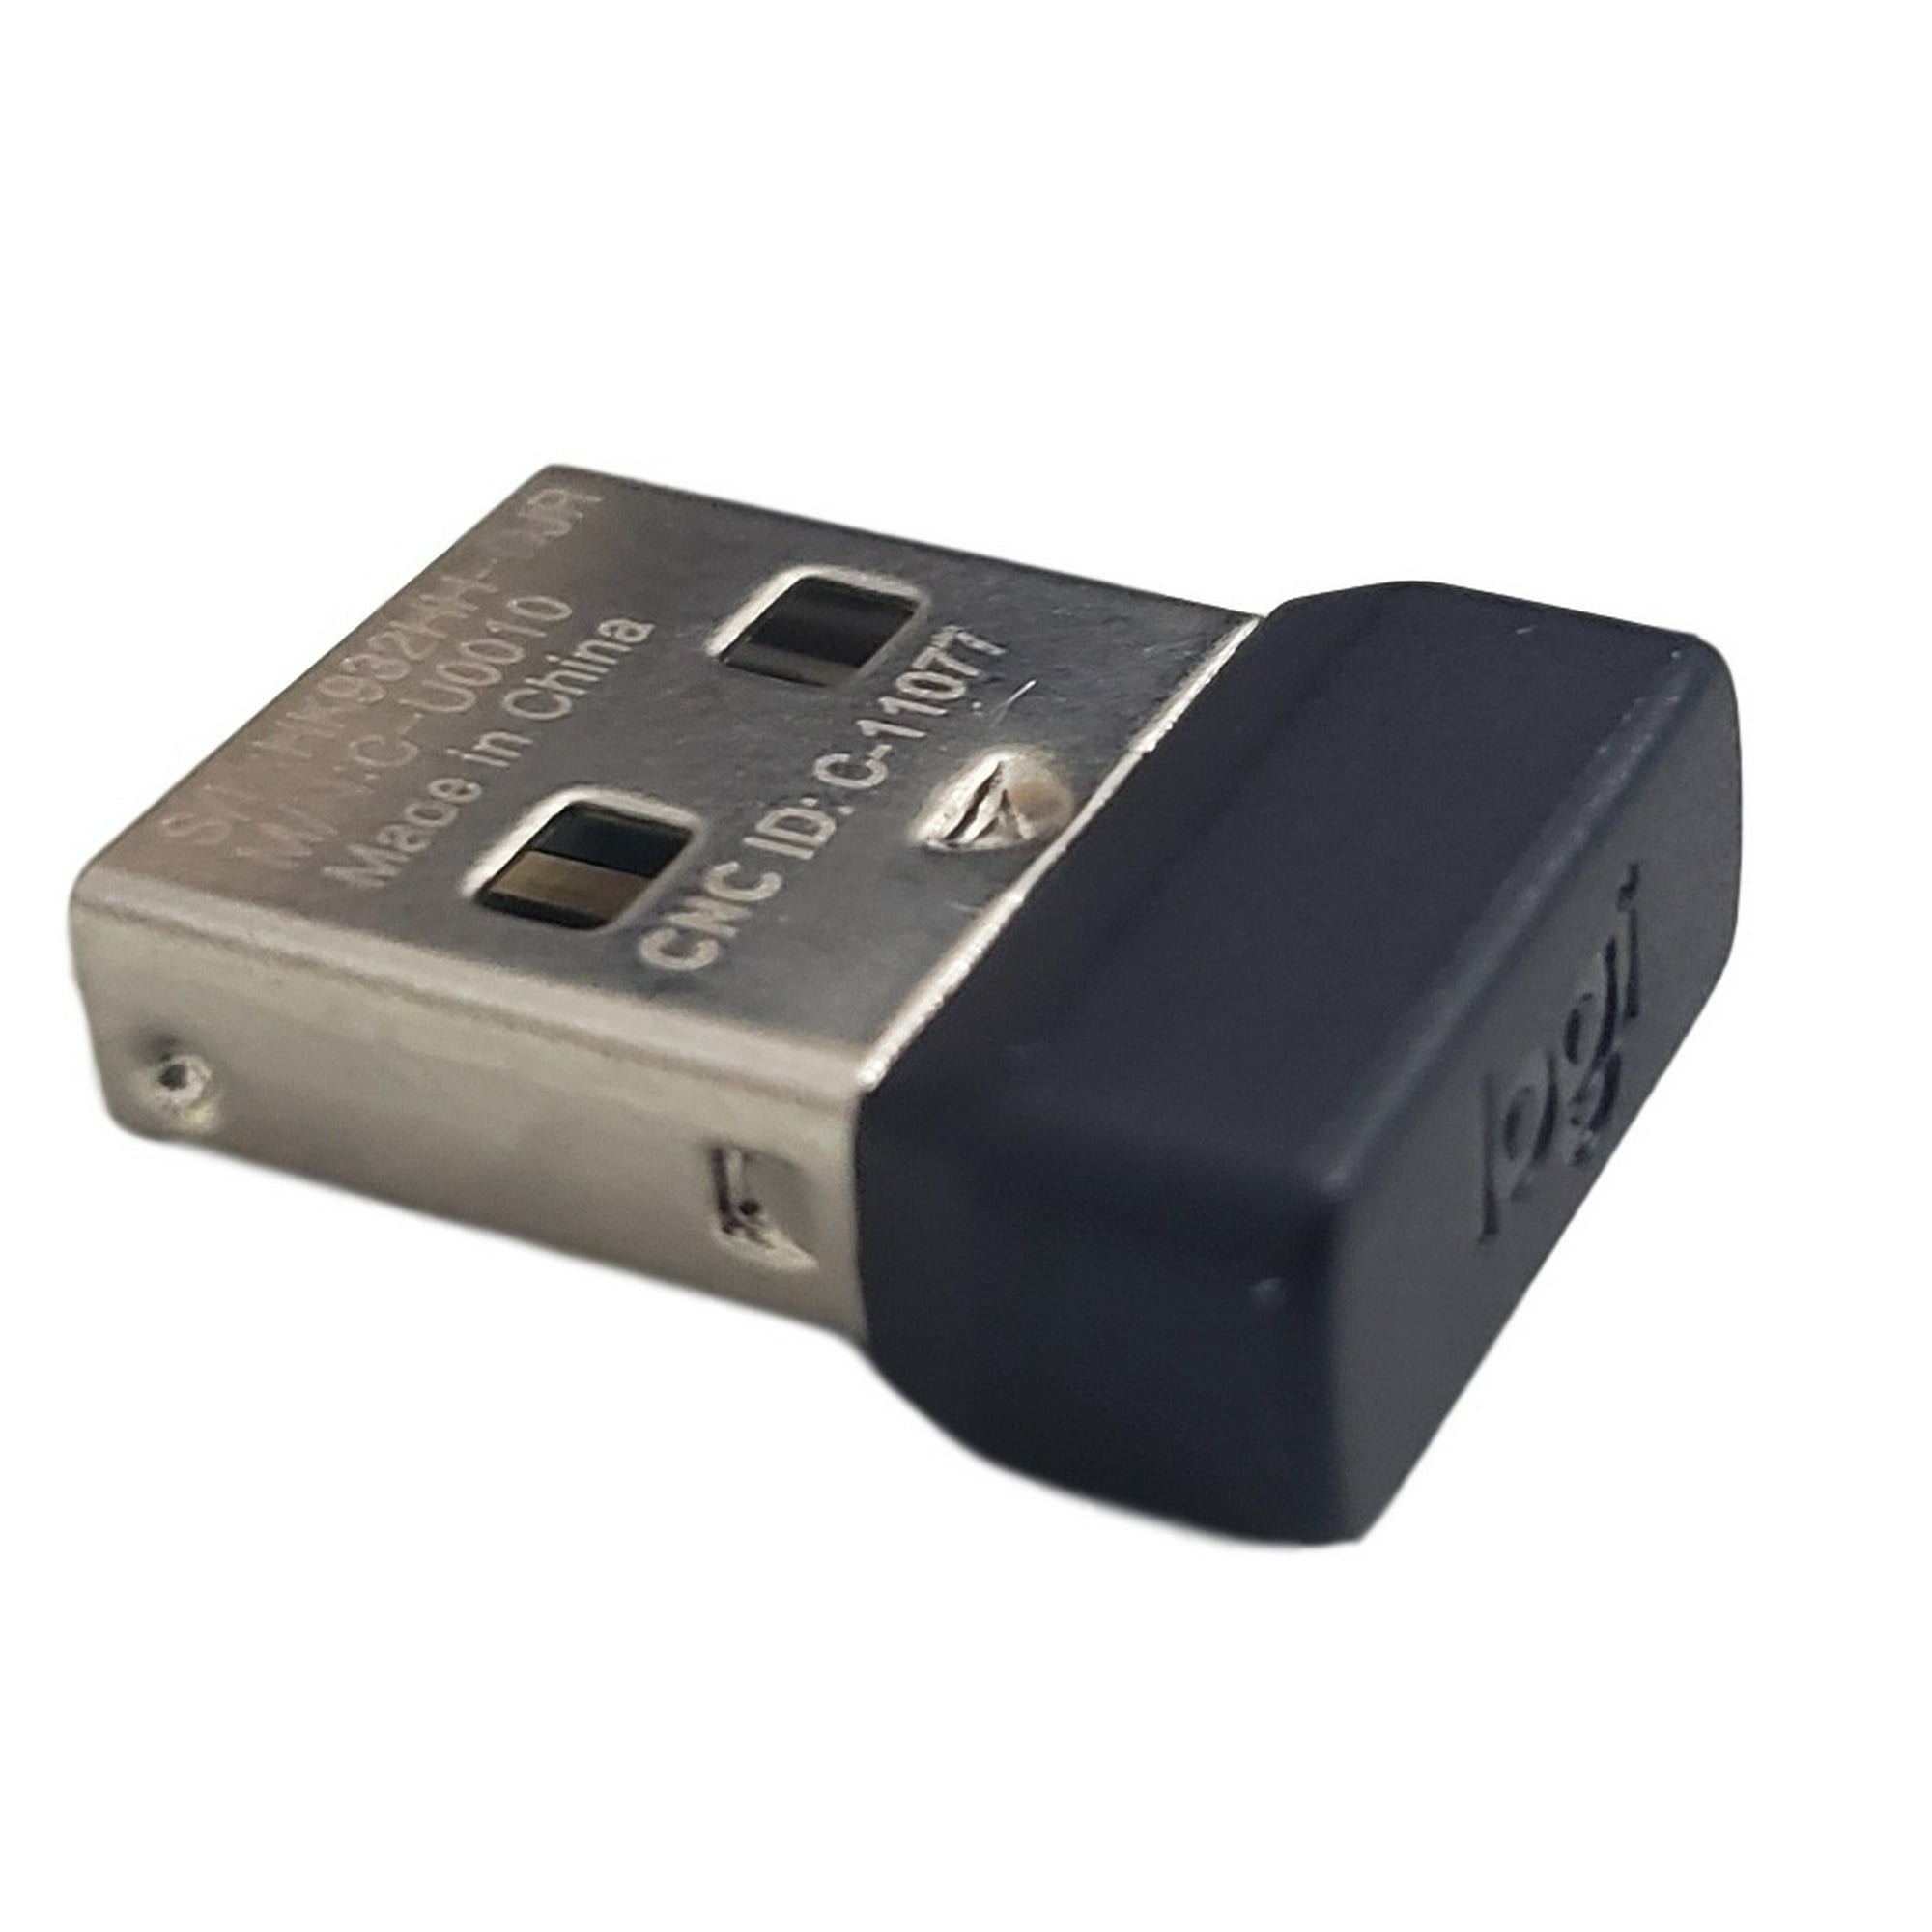 Logitech Wireless USB PC CU0010 Dongle C-11077 Adapter Non- Unifying 993-001106 | Walmart Canada